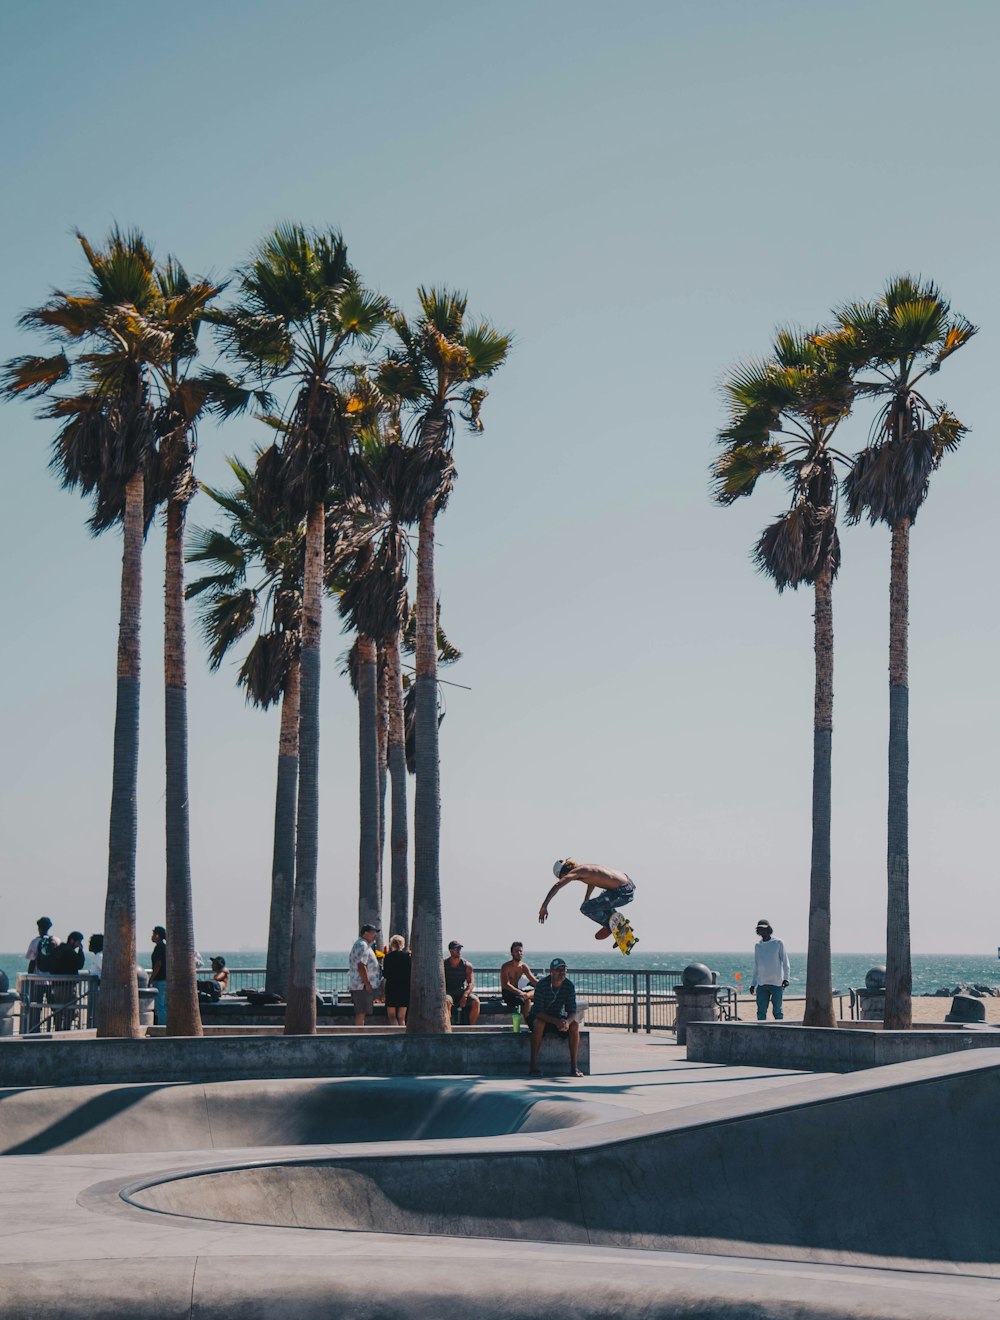 photo of man skateboarding on ramp